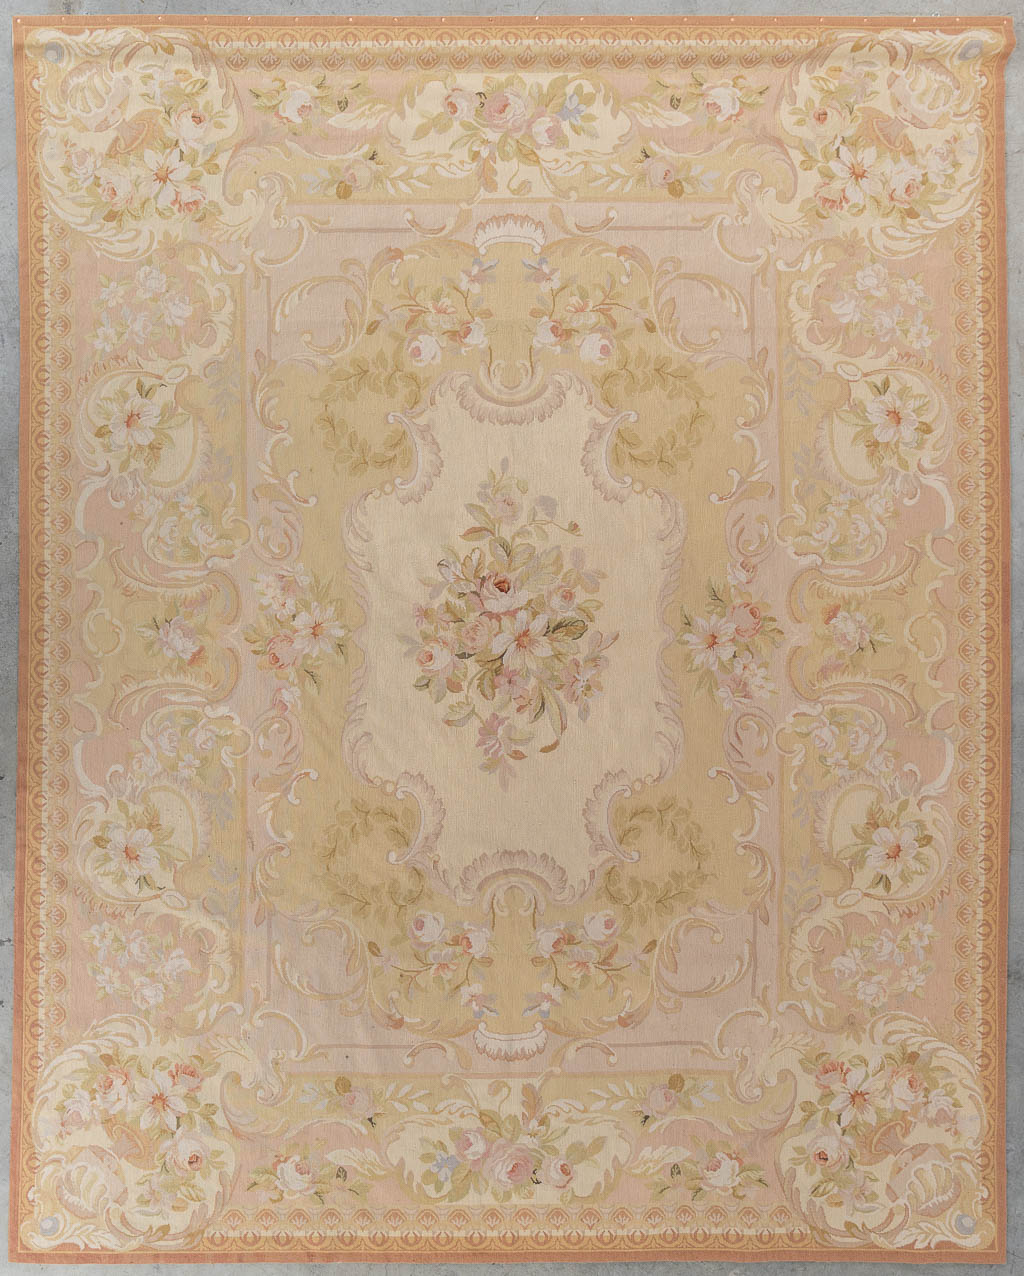 A pair of large Aubusson carpets. (L:304 x W:240 cm) - Image 3 of 21